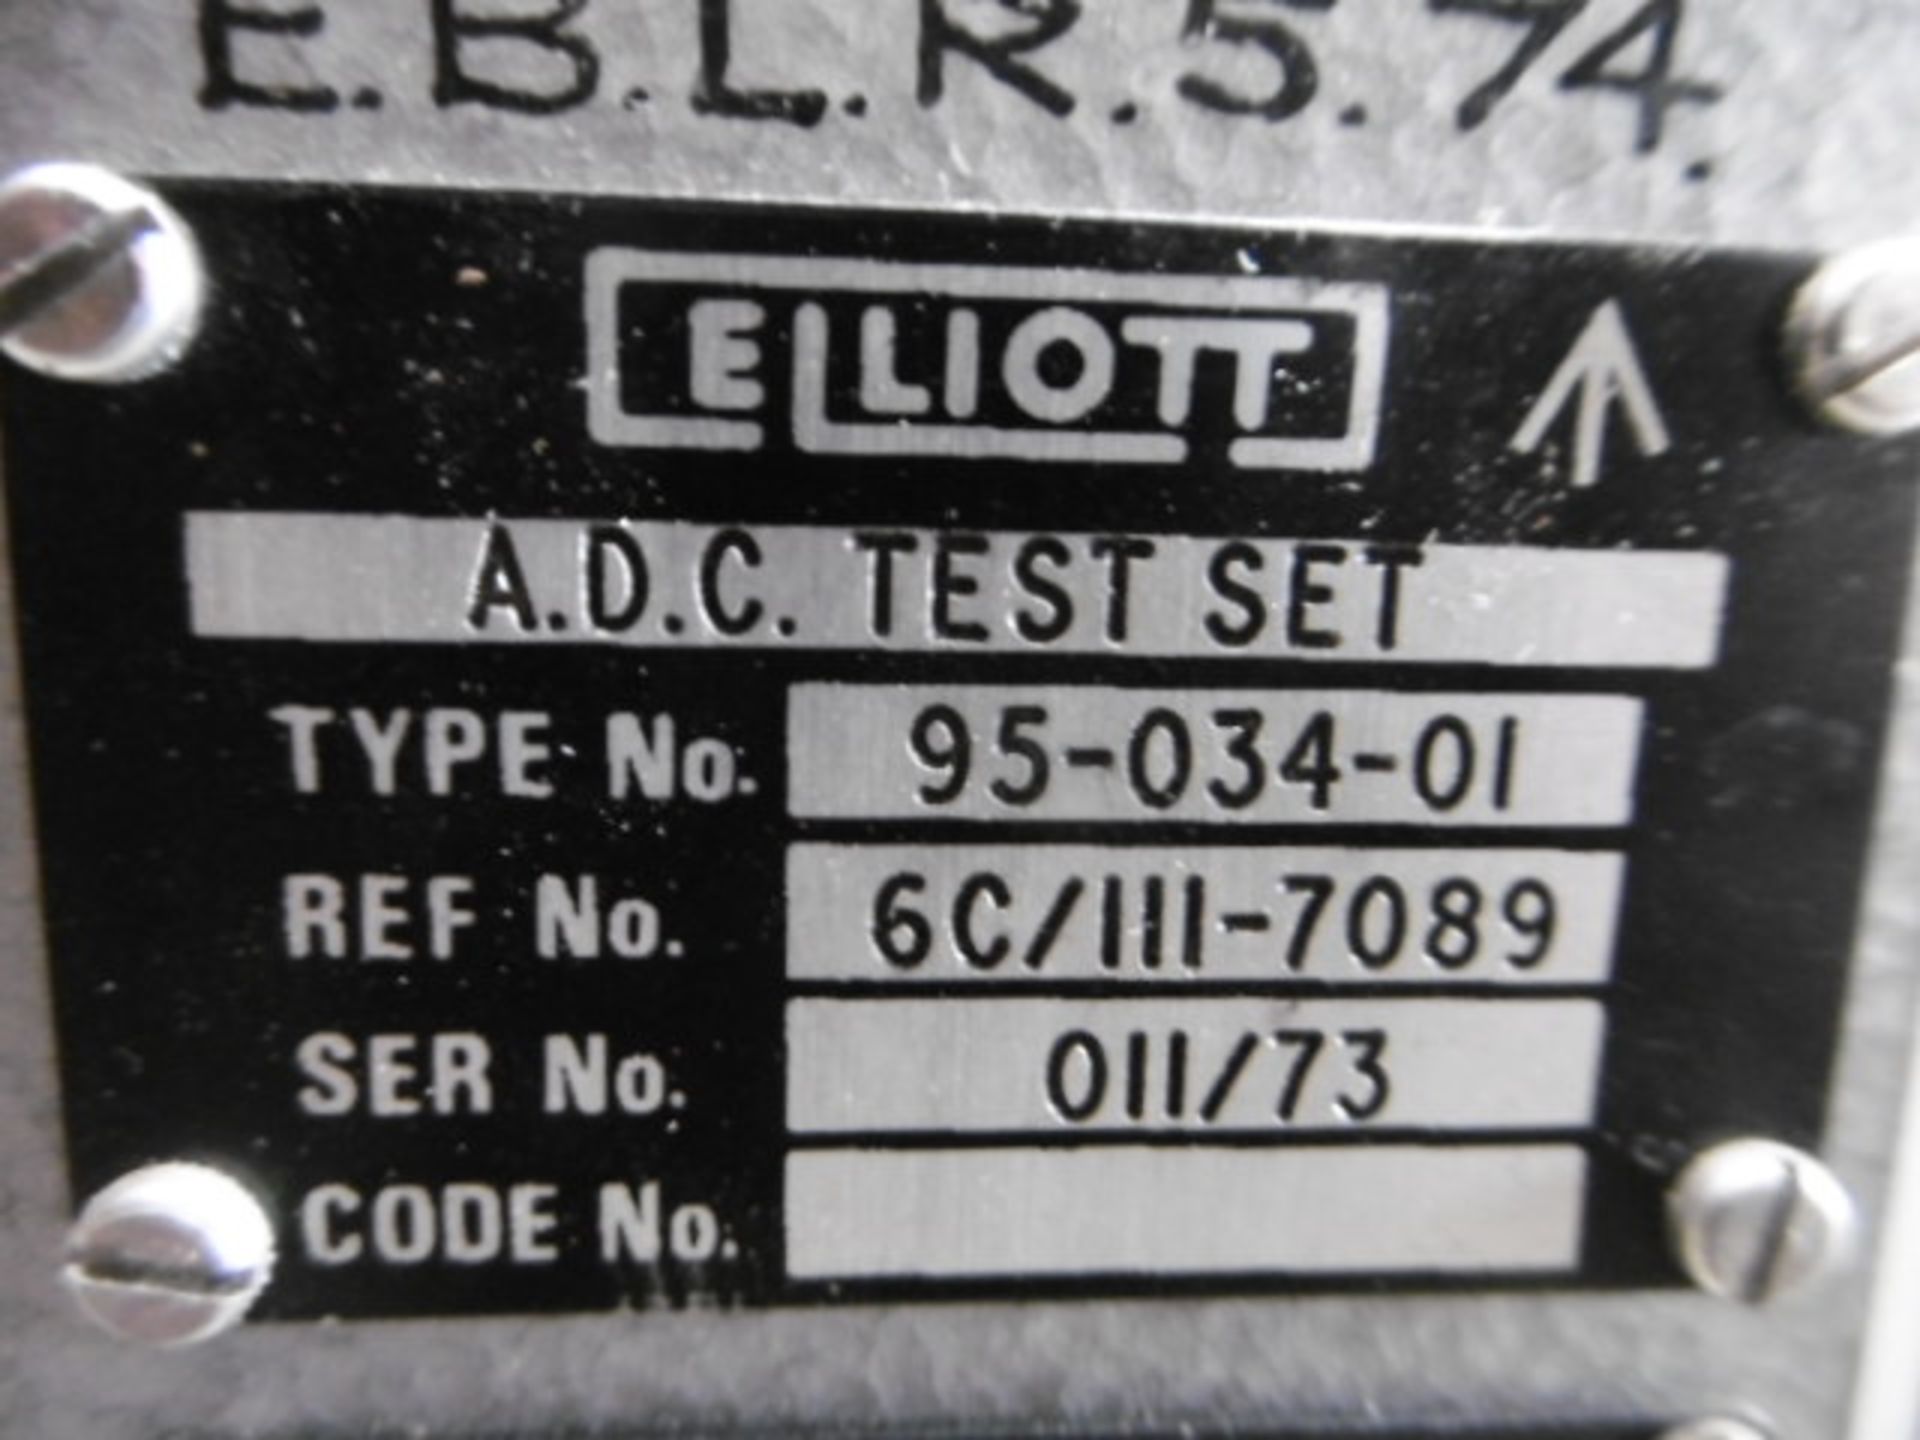 Elliott A.D.C. Test Set - Image 7 of 10